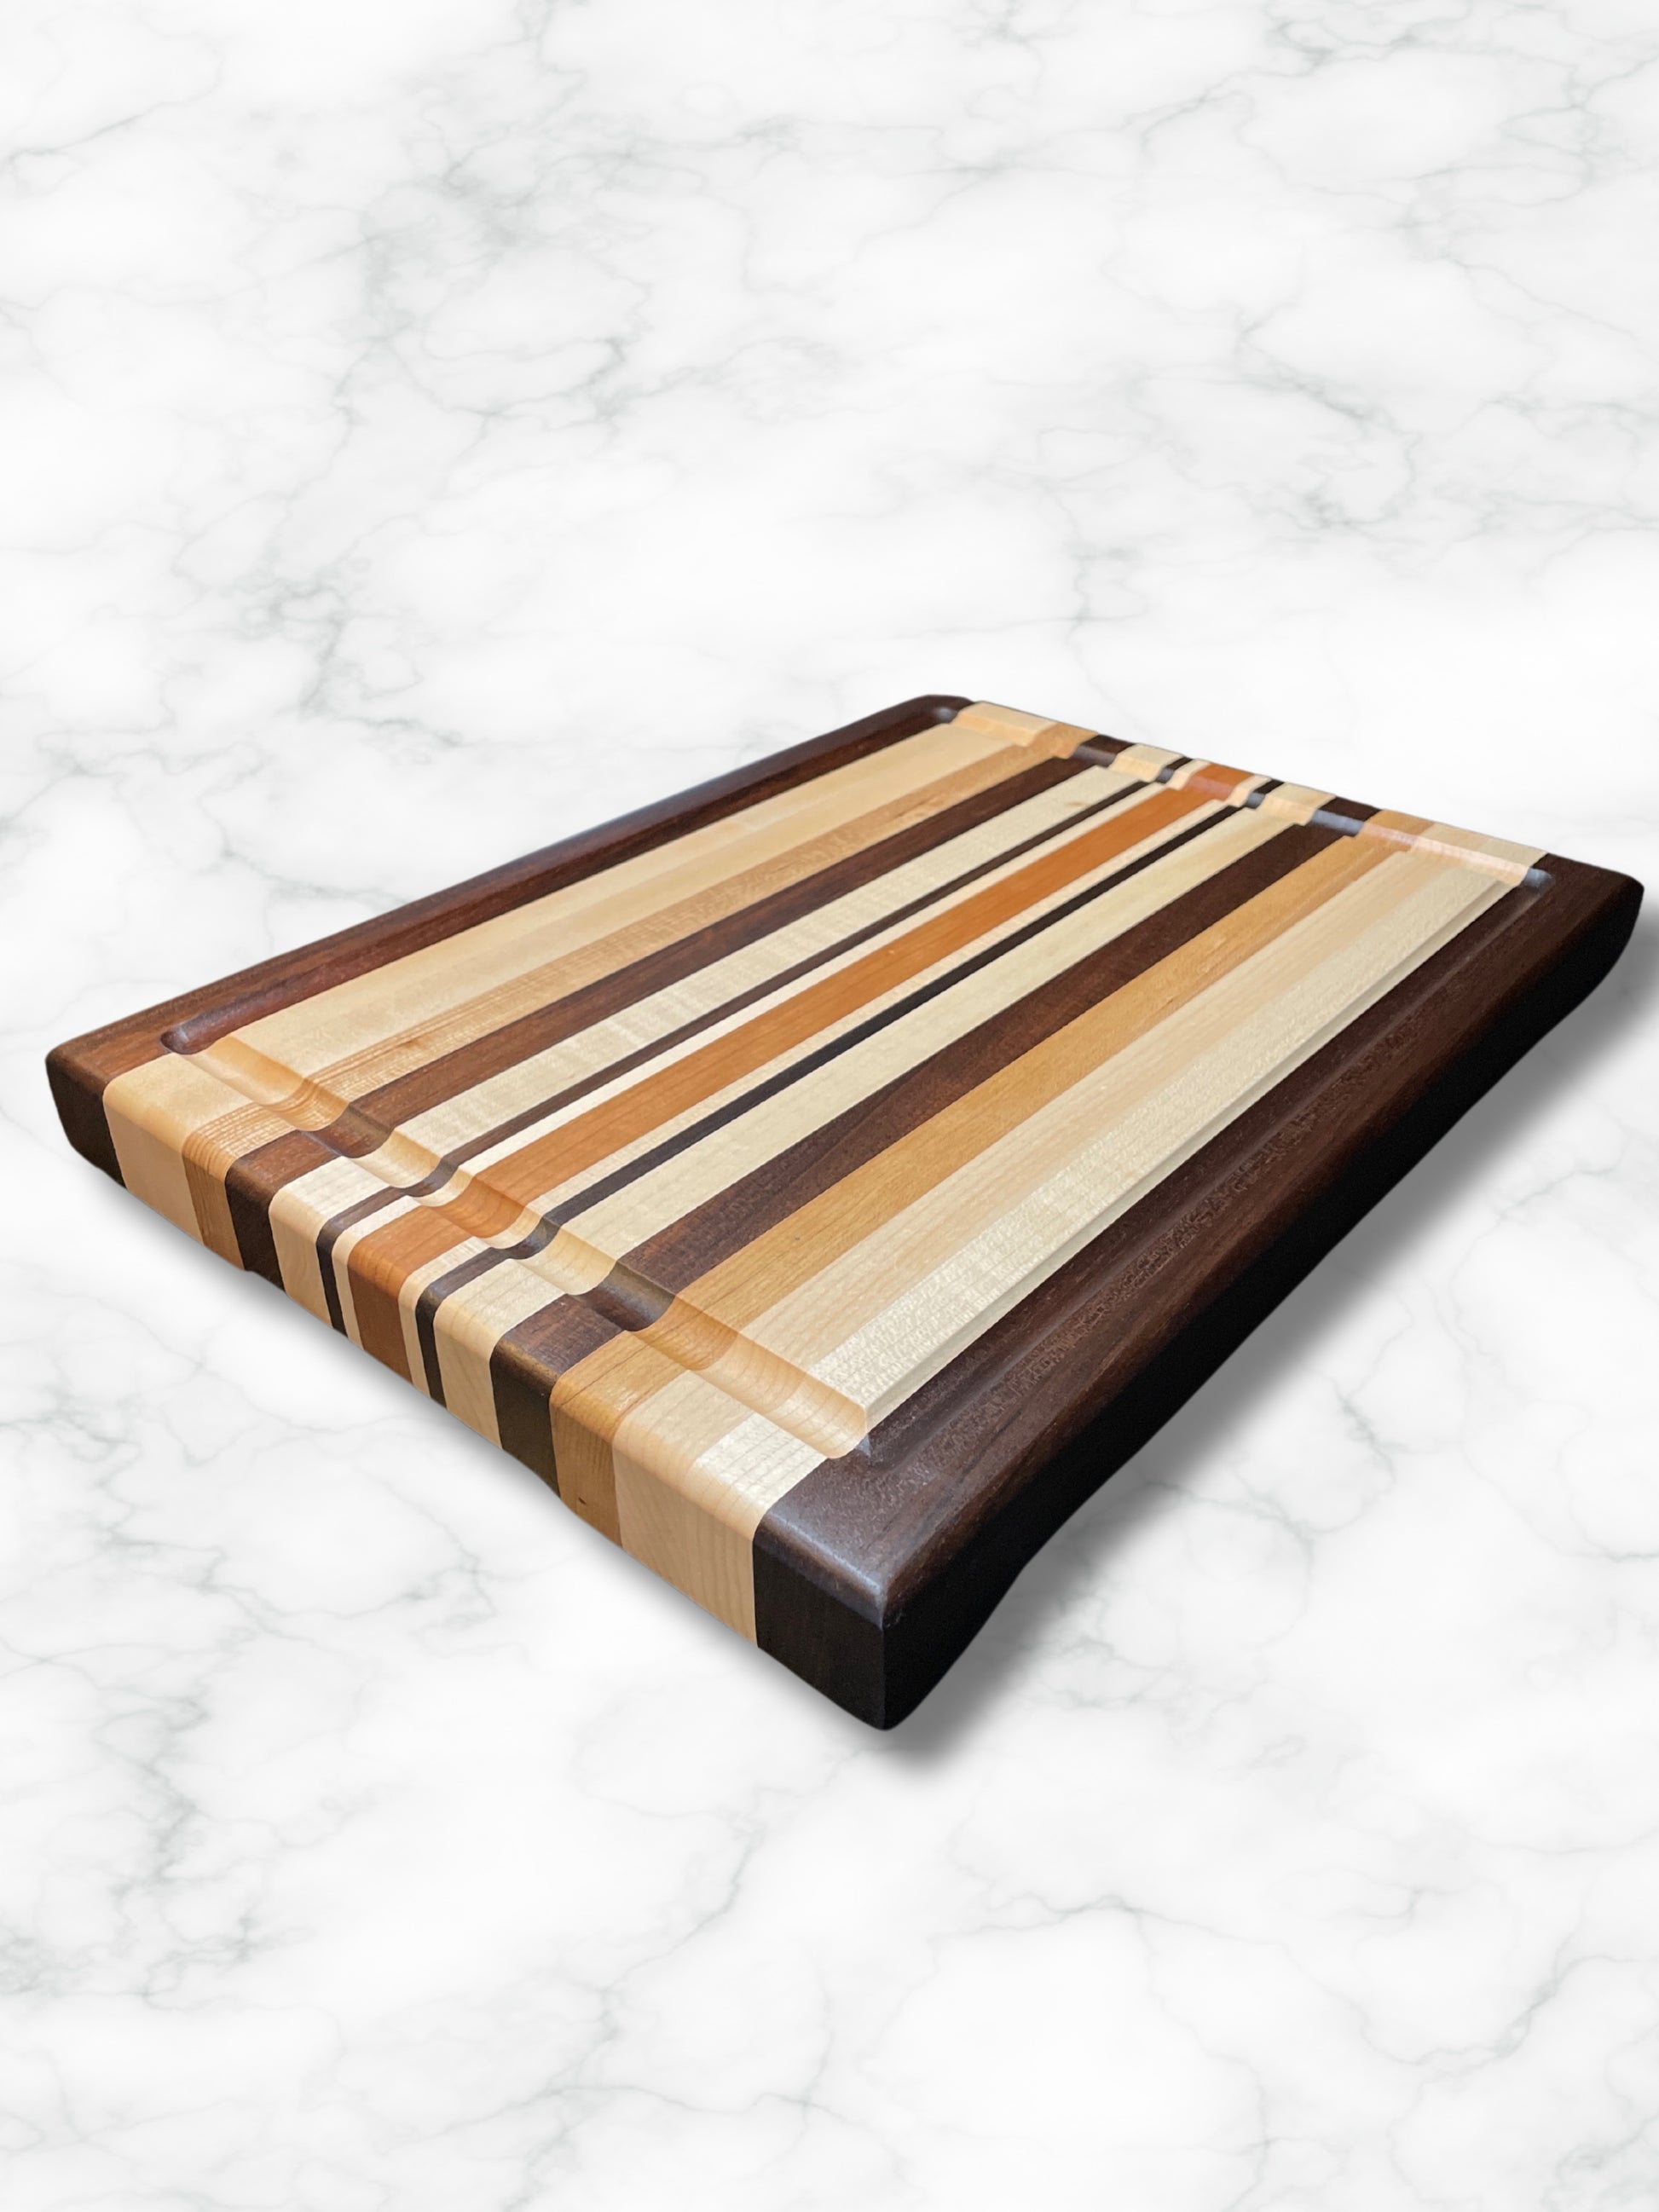 custom handmade edge grain cutting board wood walnut maple cherry, side view